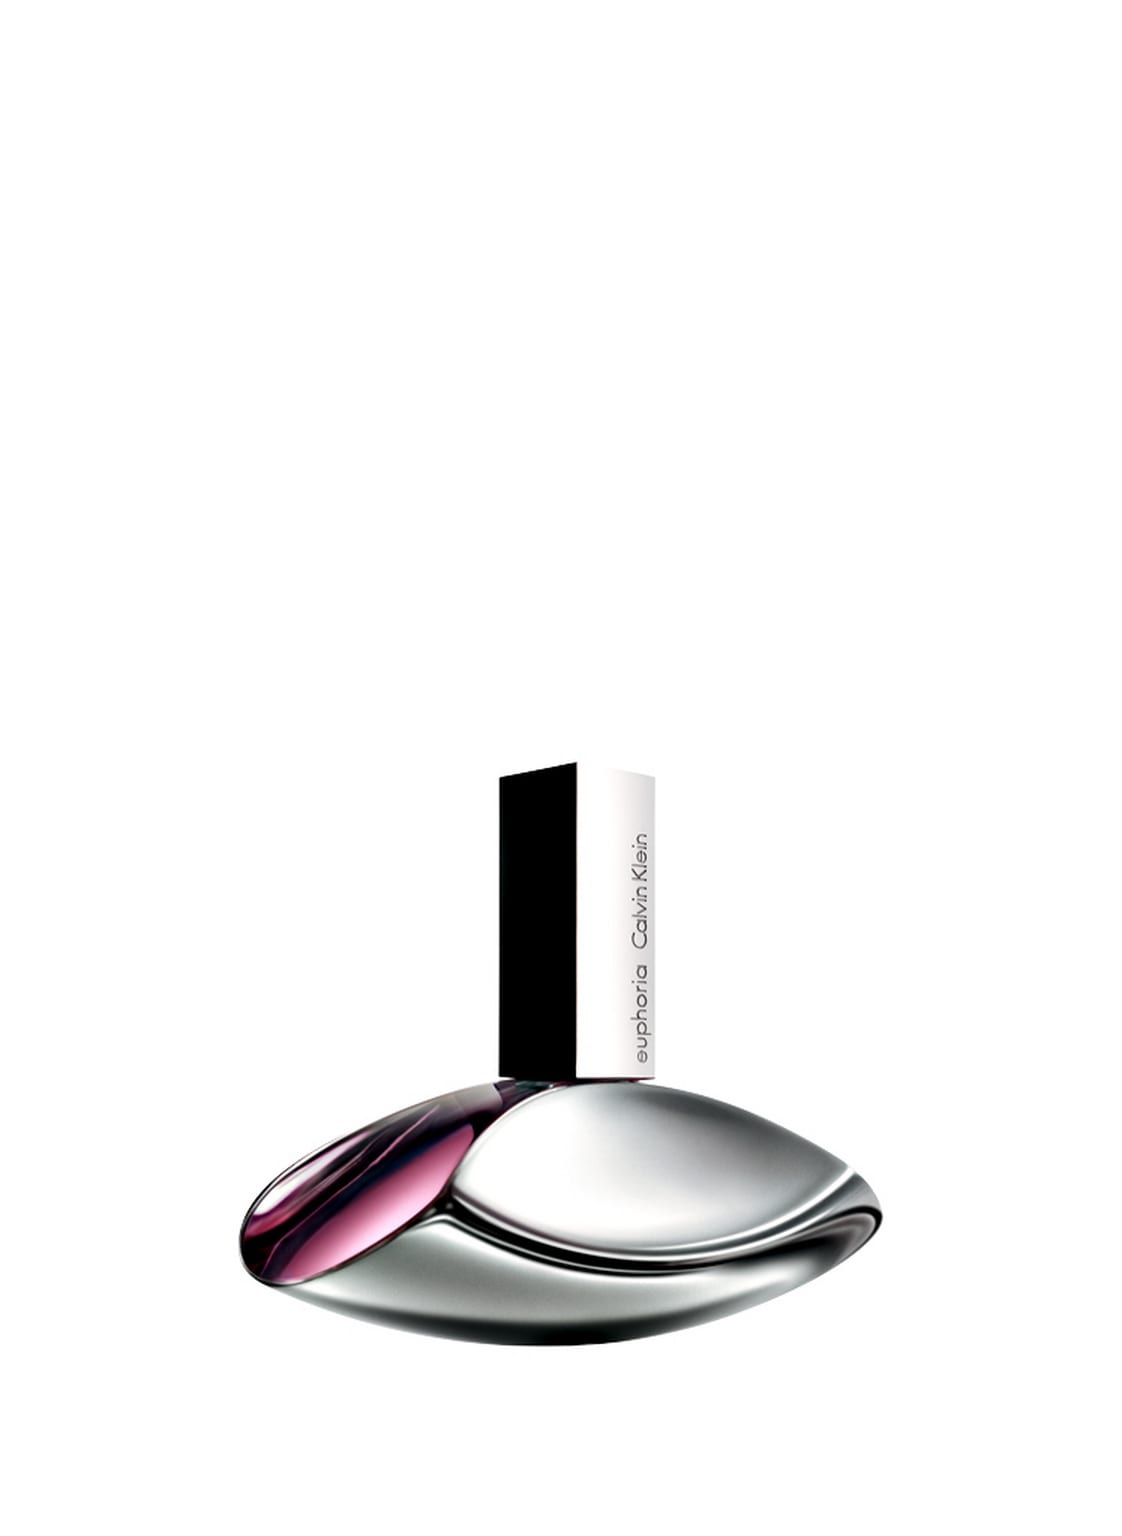 Calvin Klein Euphoria Eau de Parfum 30 ml von Calvin Klein